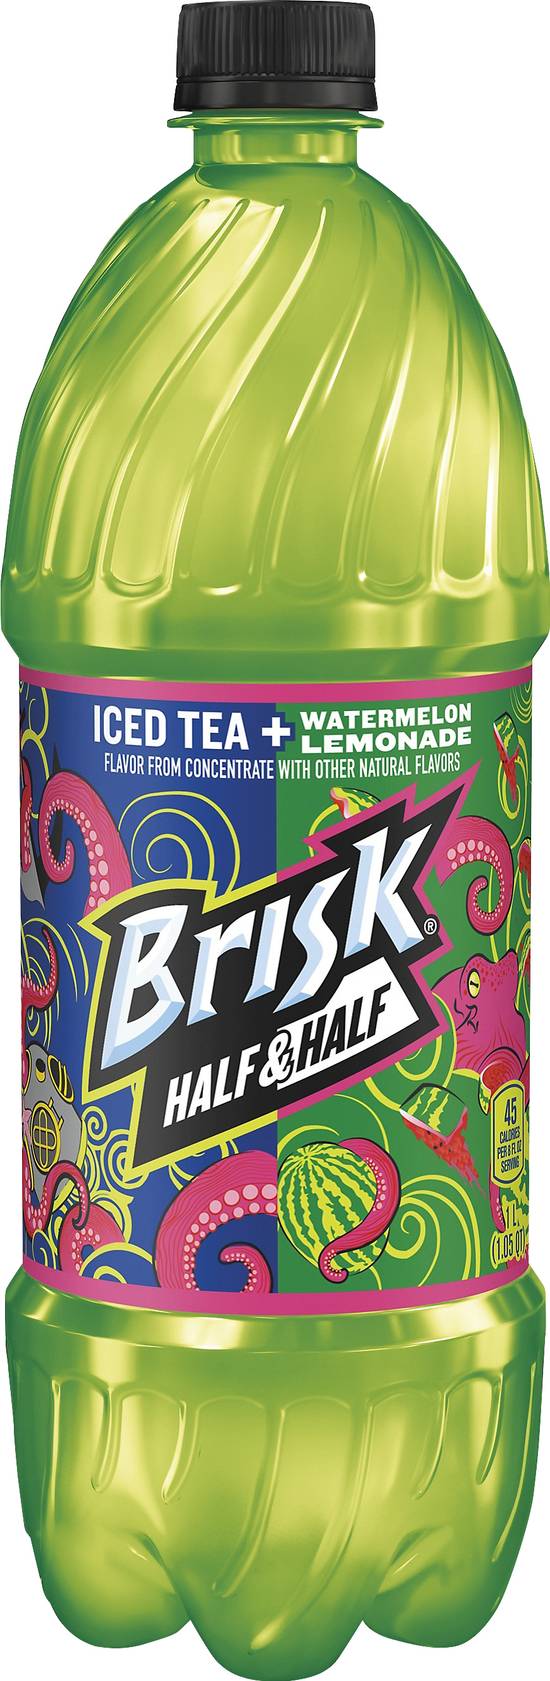 Brisk Half & Half, Iced Tea + Watermelon Lemonade